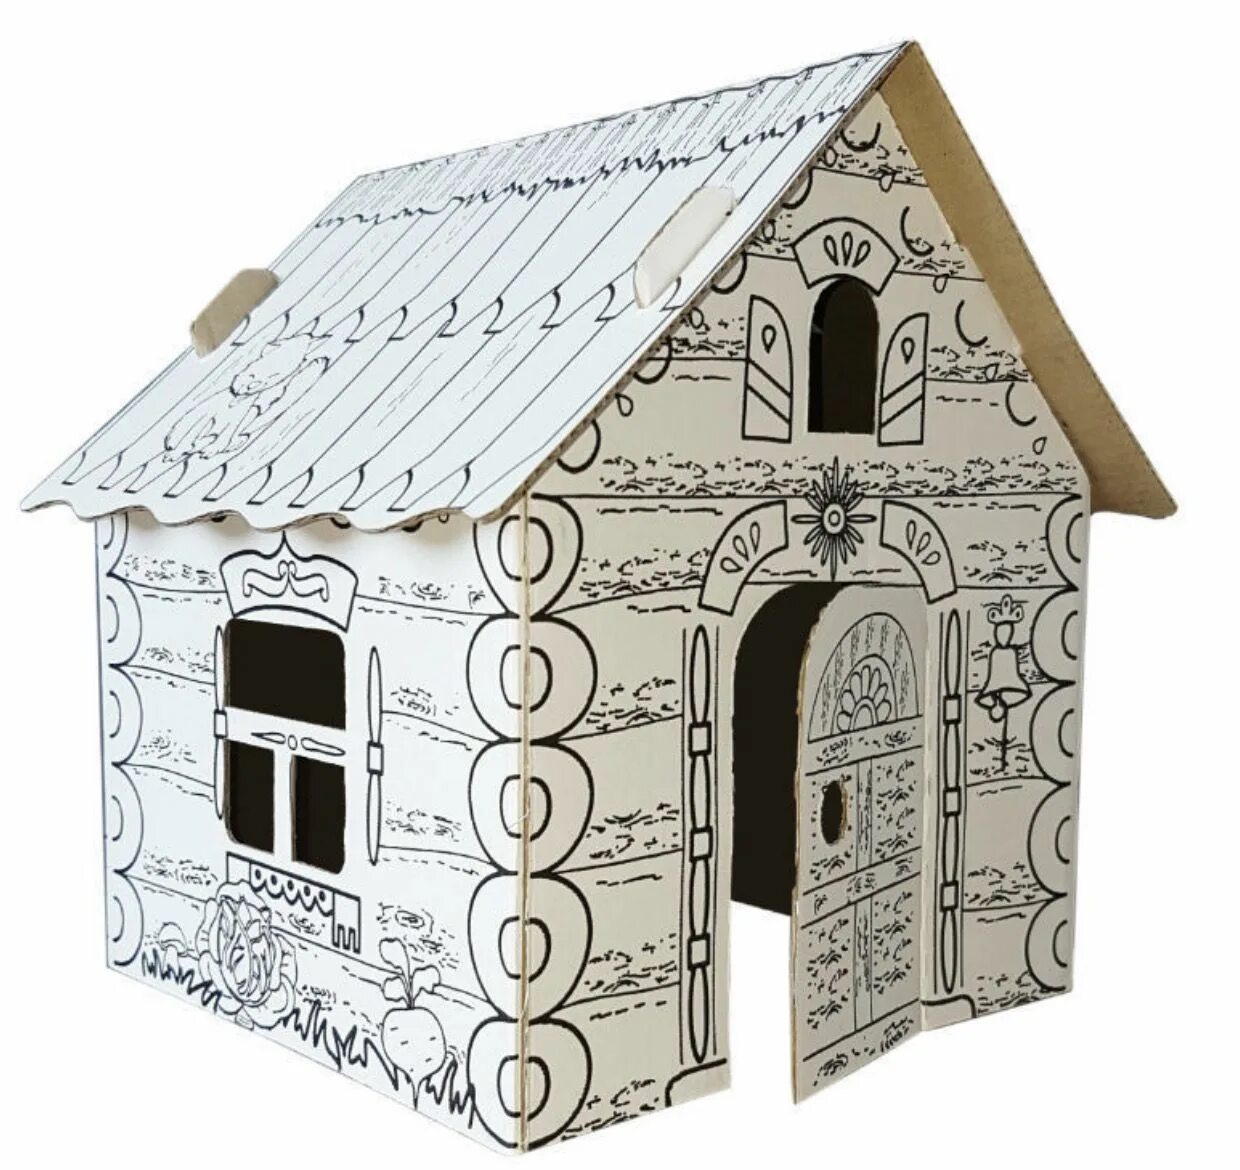 Wonderful cardboard house tyumen